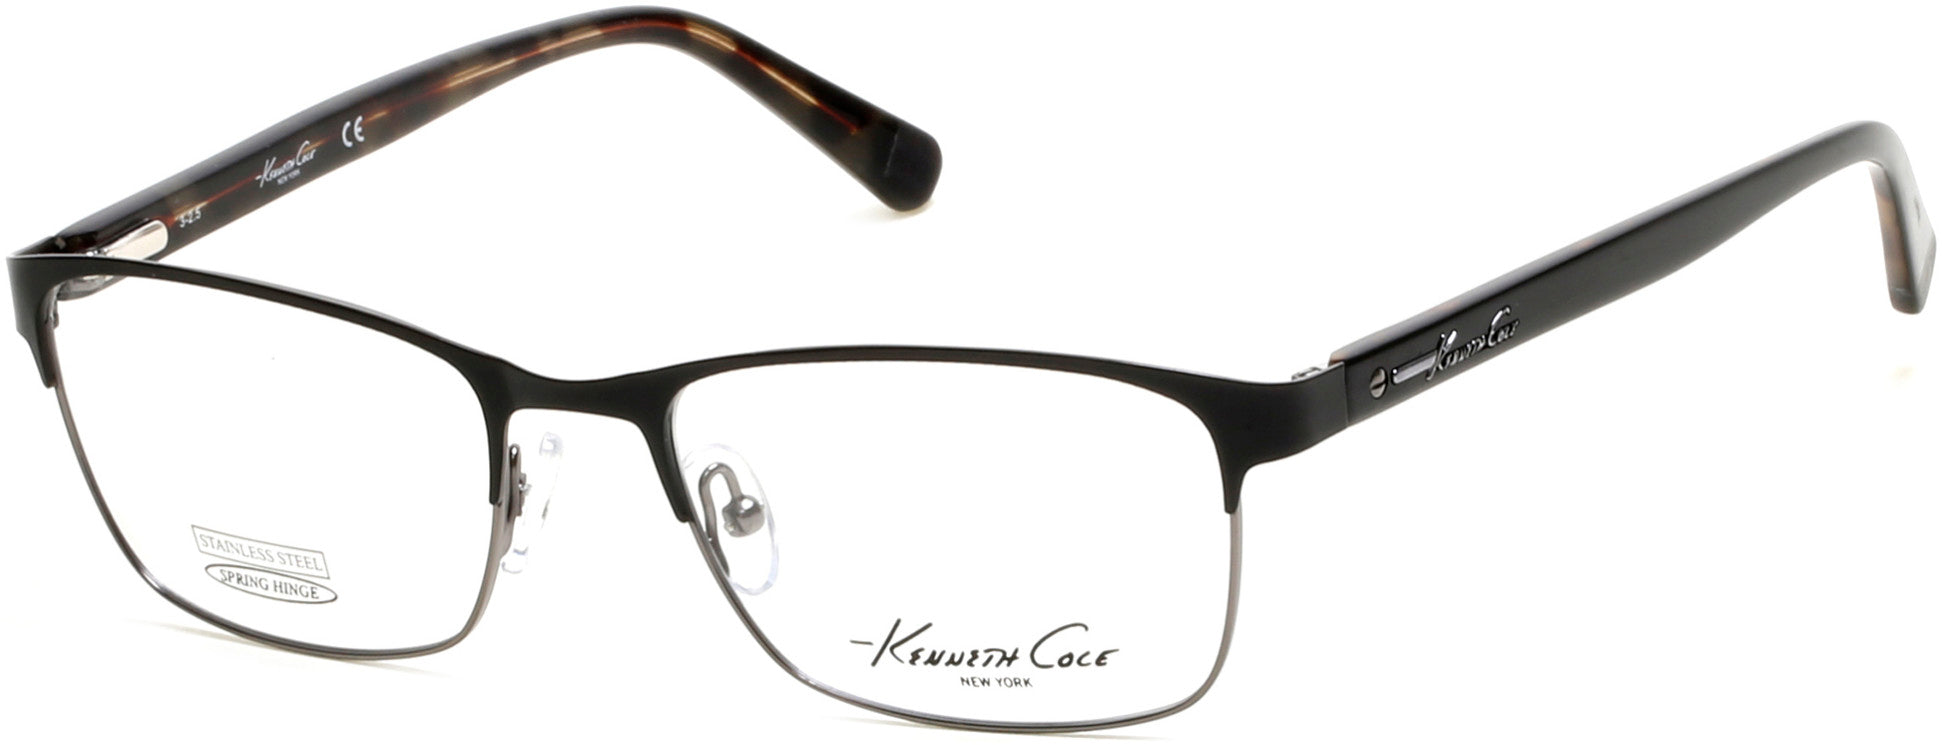 Kenneth Cole New York,Kenneth Cole Reaction KC0248 Geometric Eyeglasses 002-002 - Matte Black